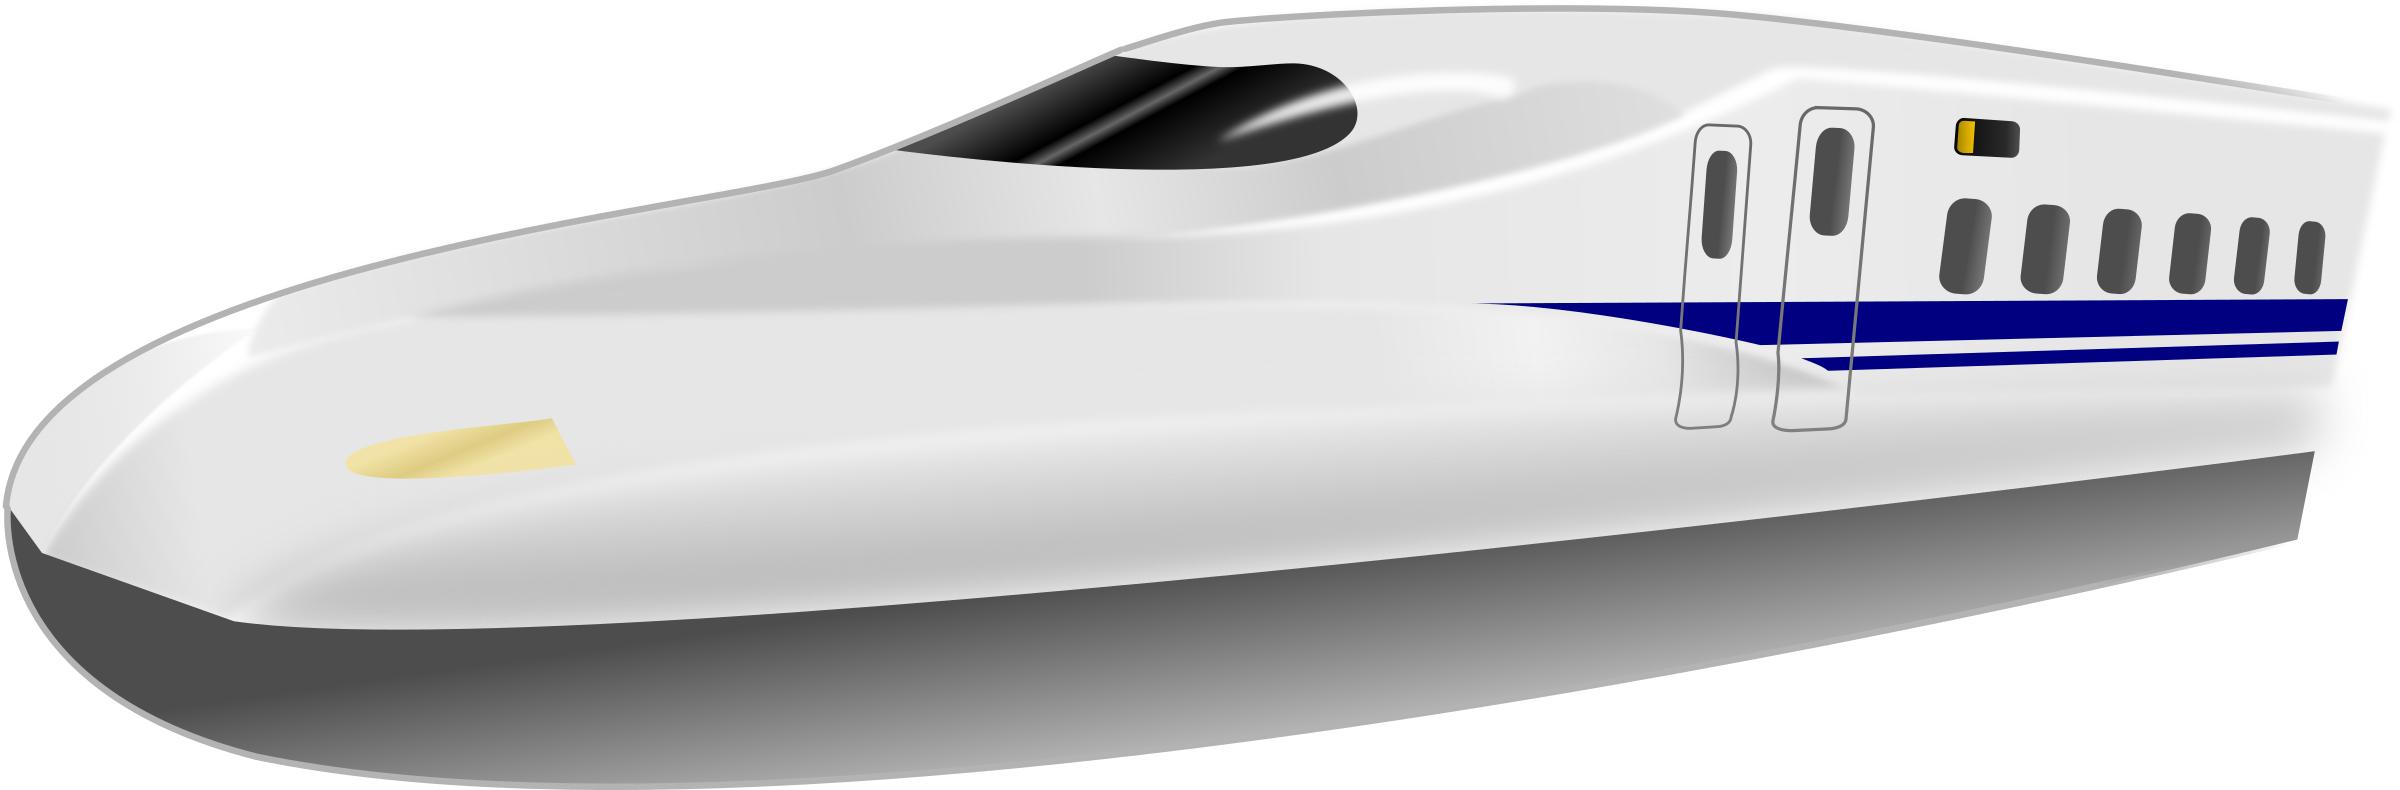 Shinkansen N700 Frontview png